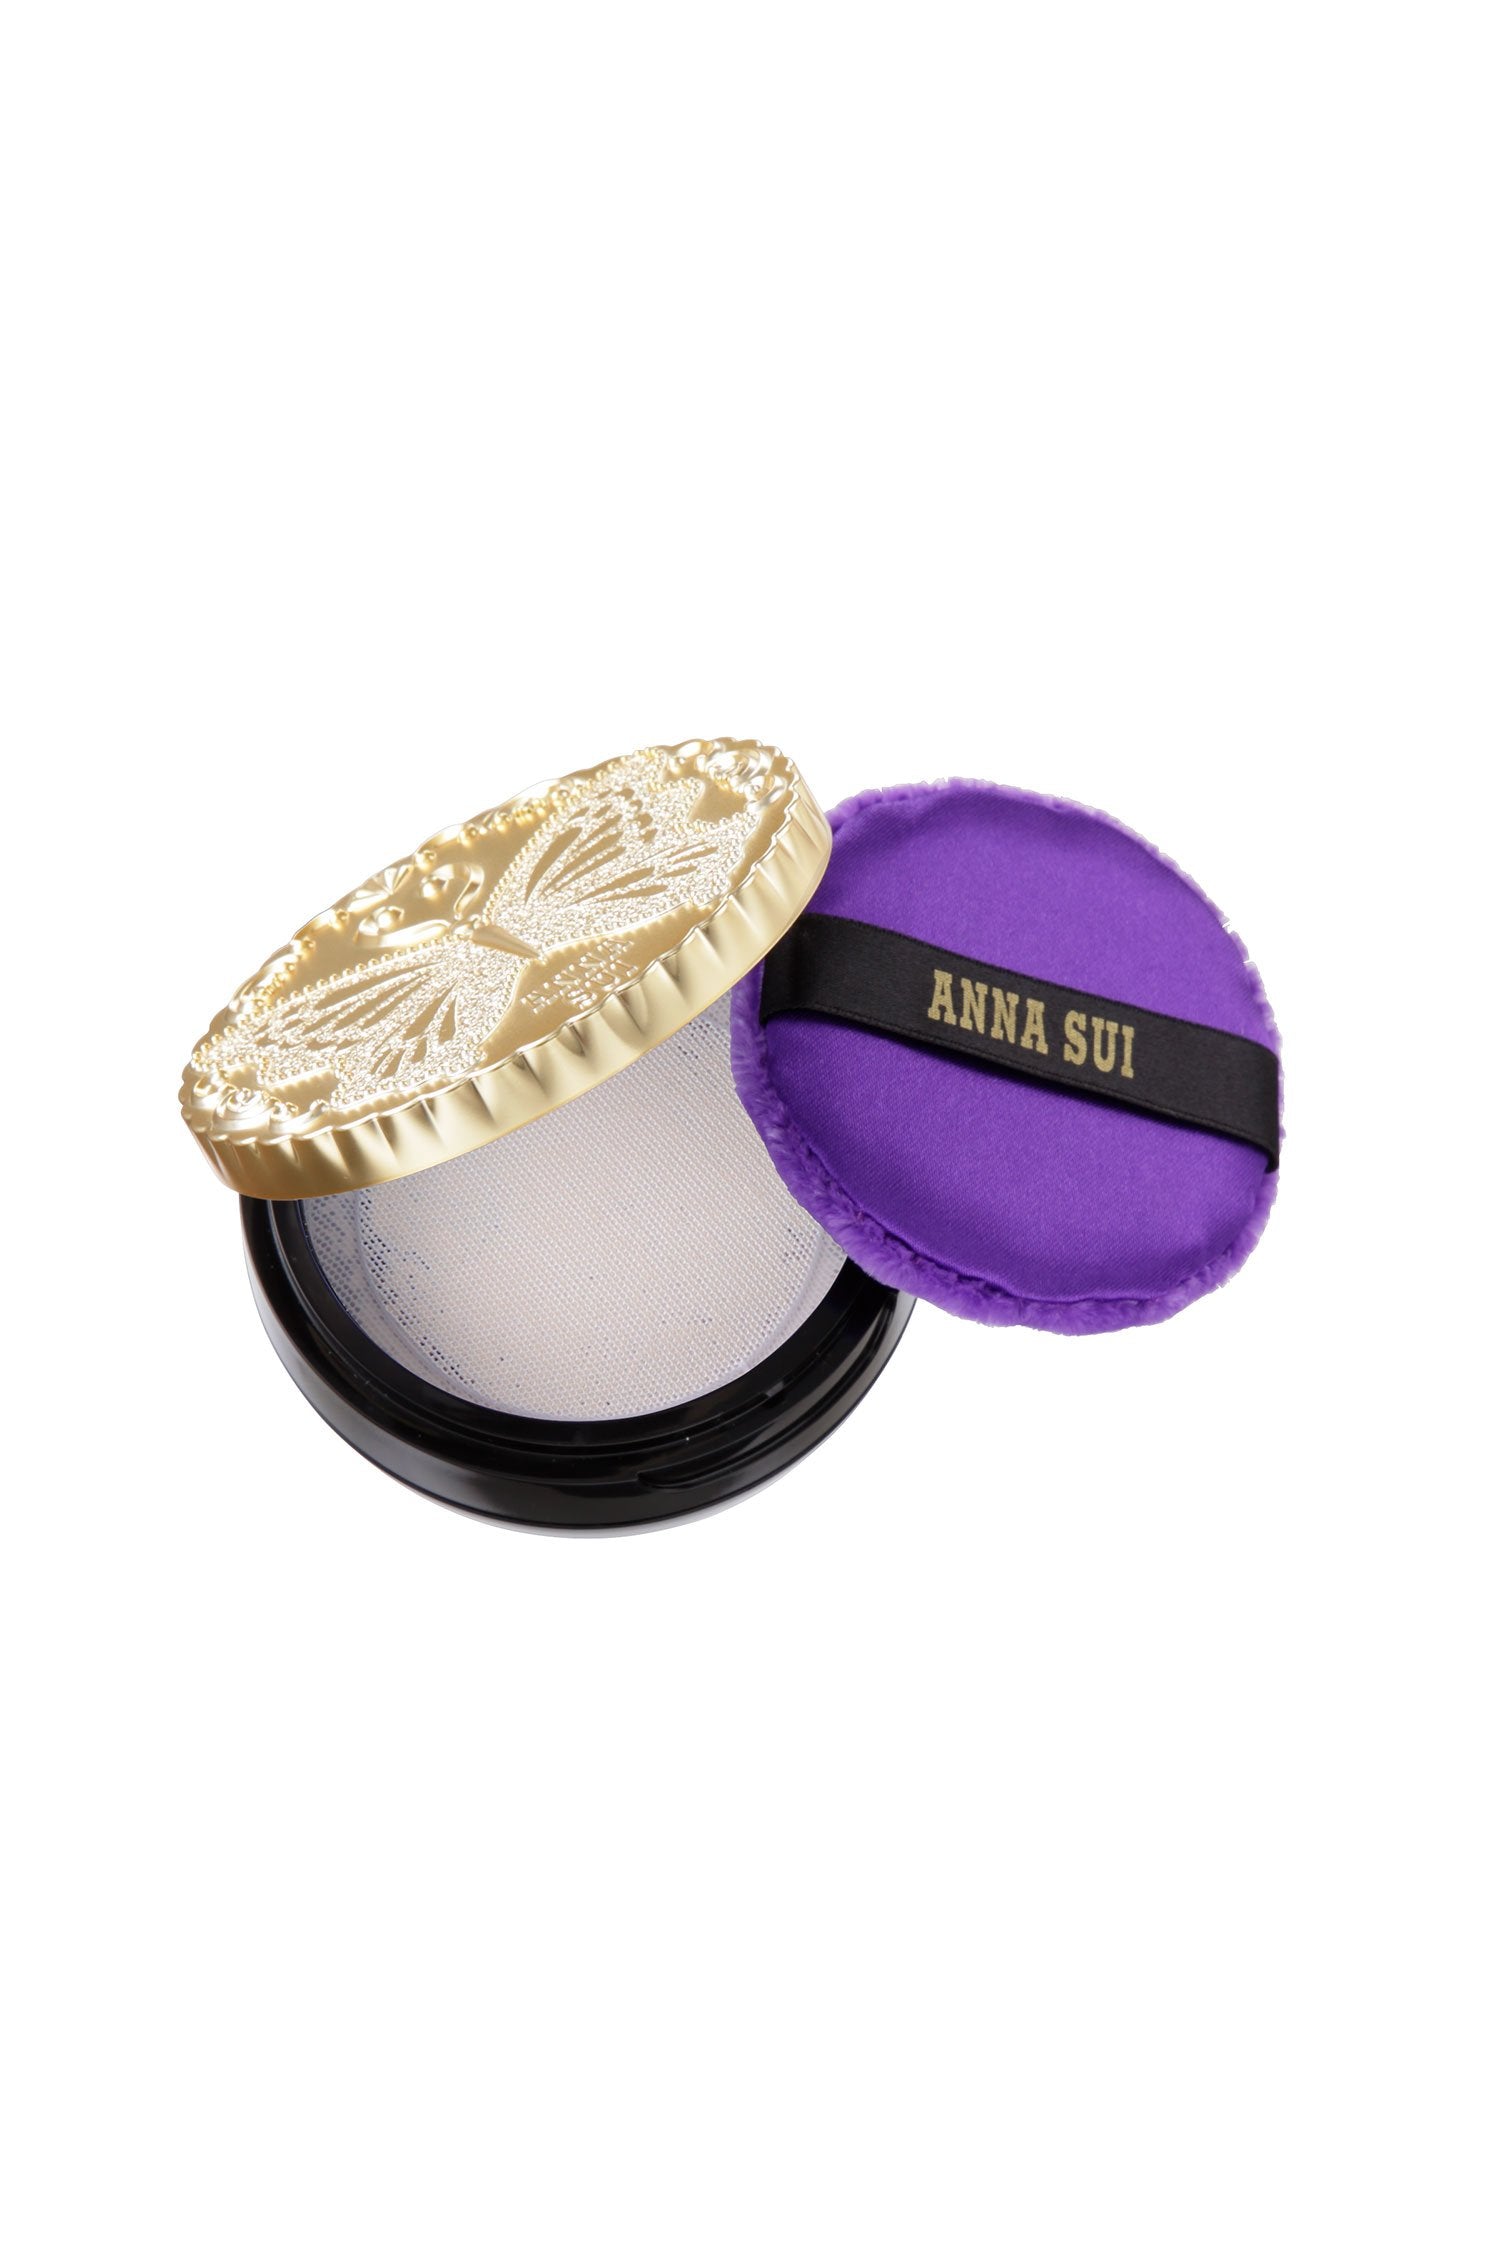 Mini Loose LIGHT BEIGE Set, round black case, golden lid, engraved butterfly on top, purple pad